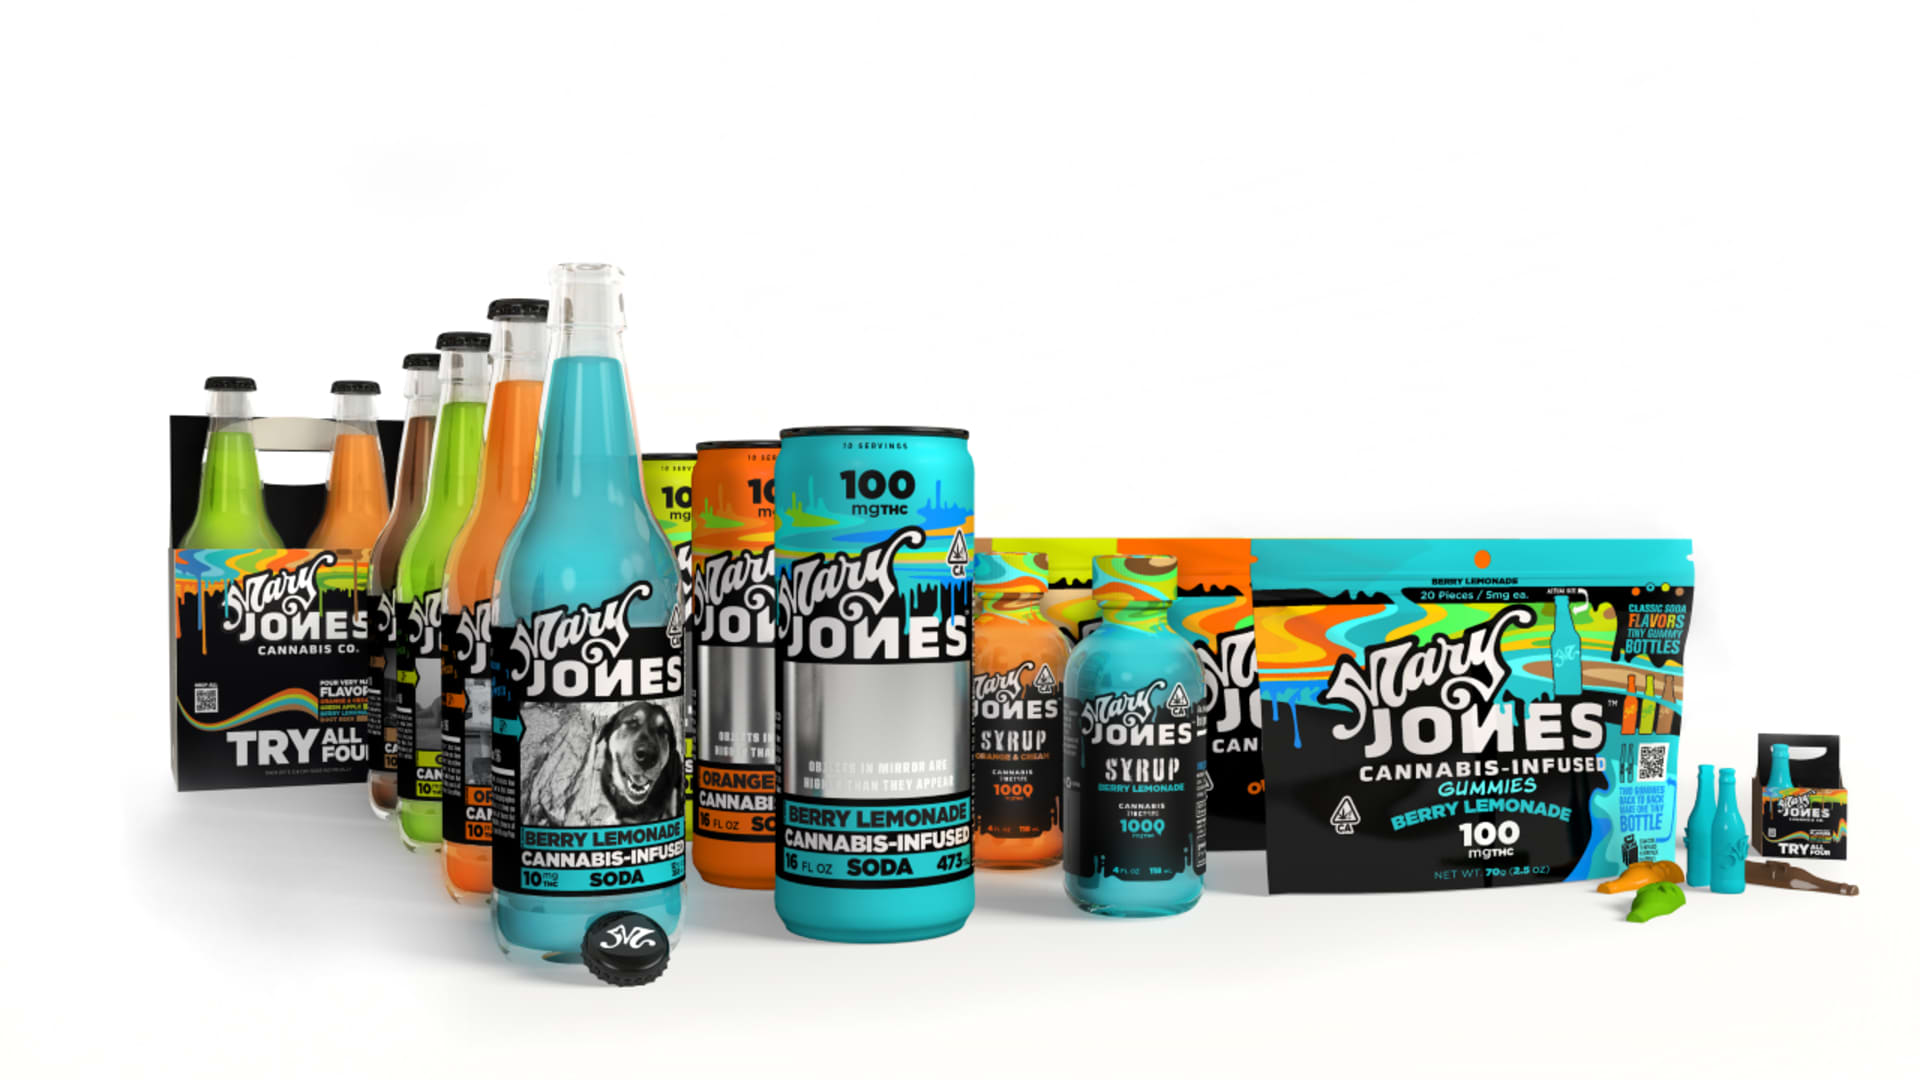 Jones Soda unveils cannabis-infused sodas, syrups and gummies under new Mary Jones brand